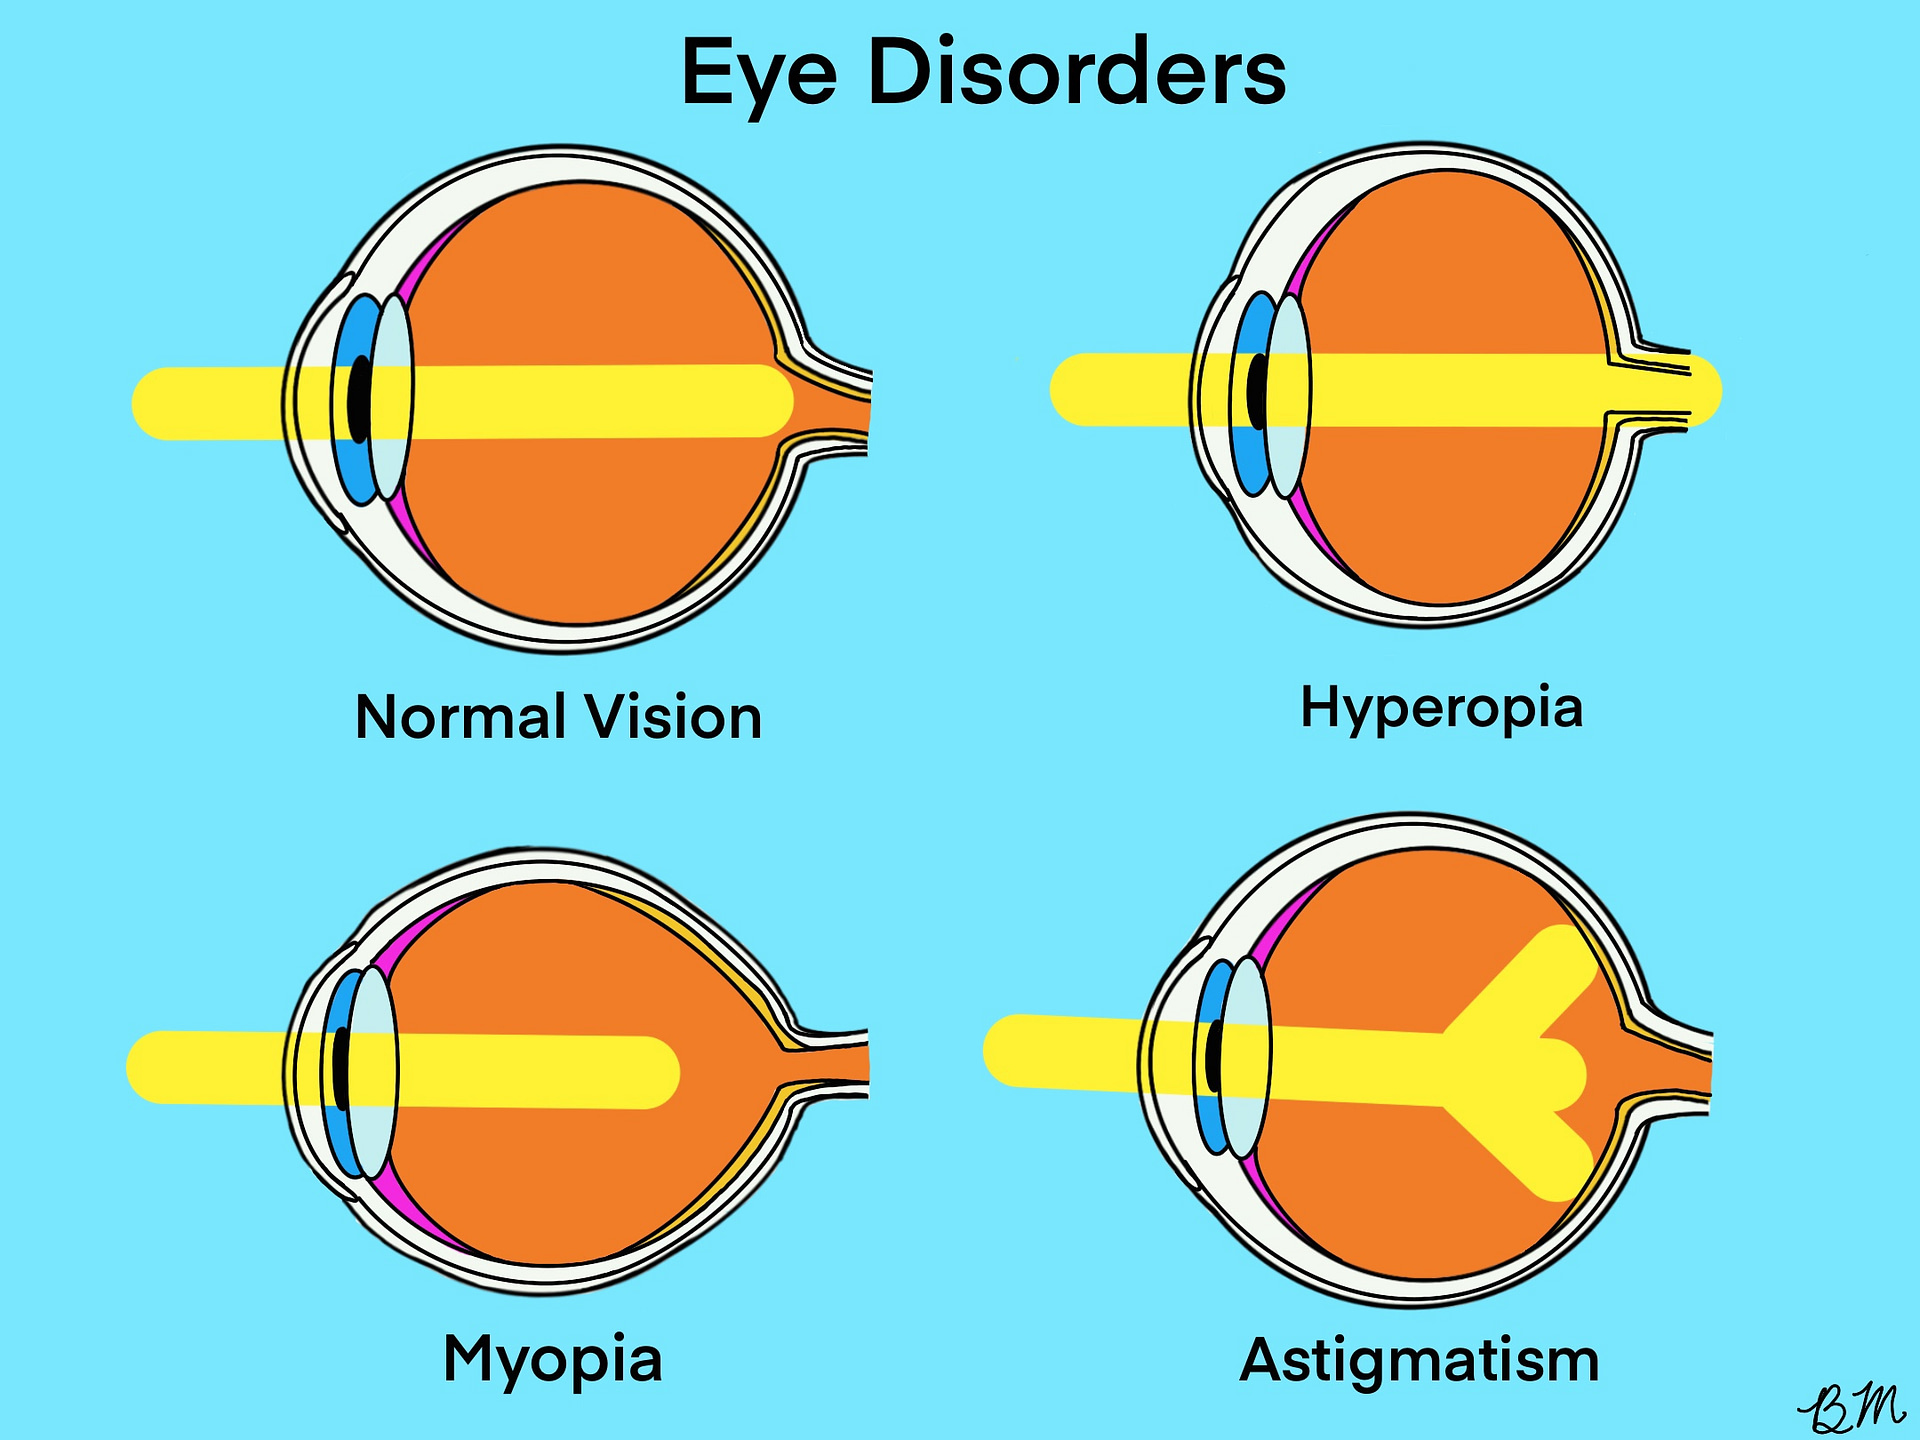 What are Myopia Hyperopia Astigmatism 
